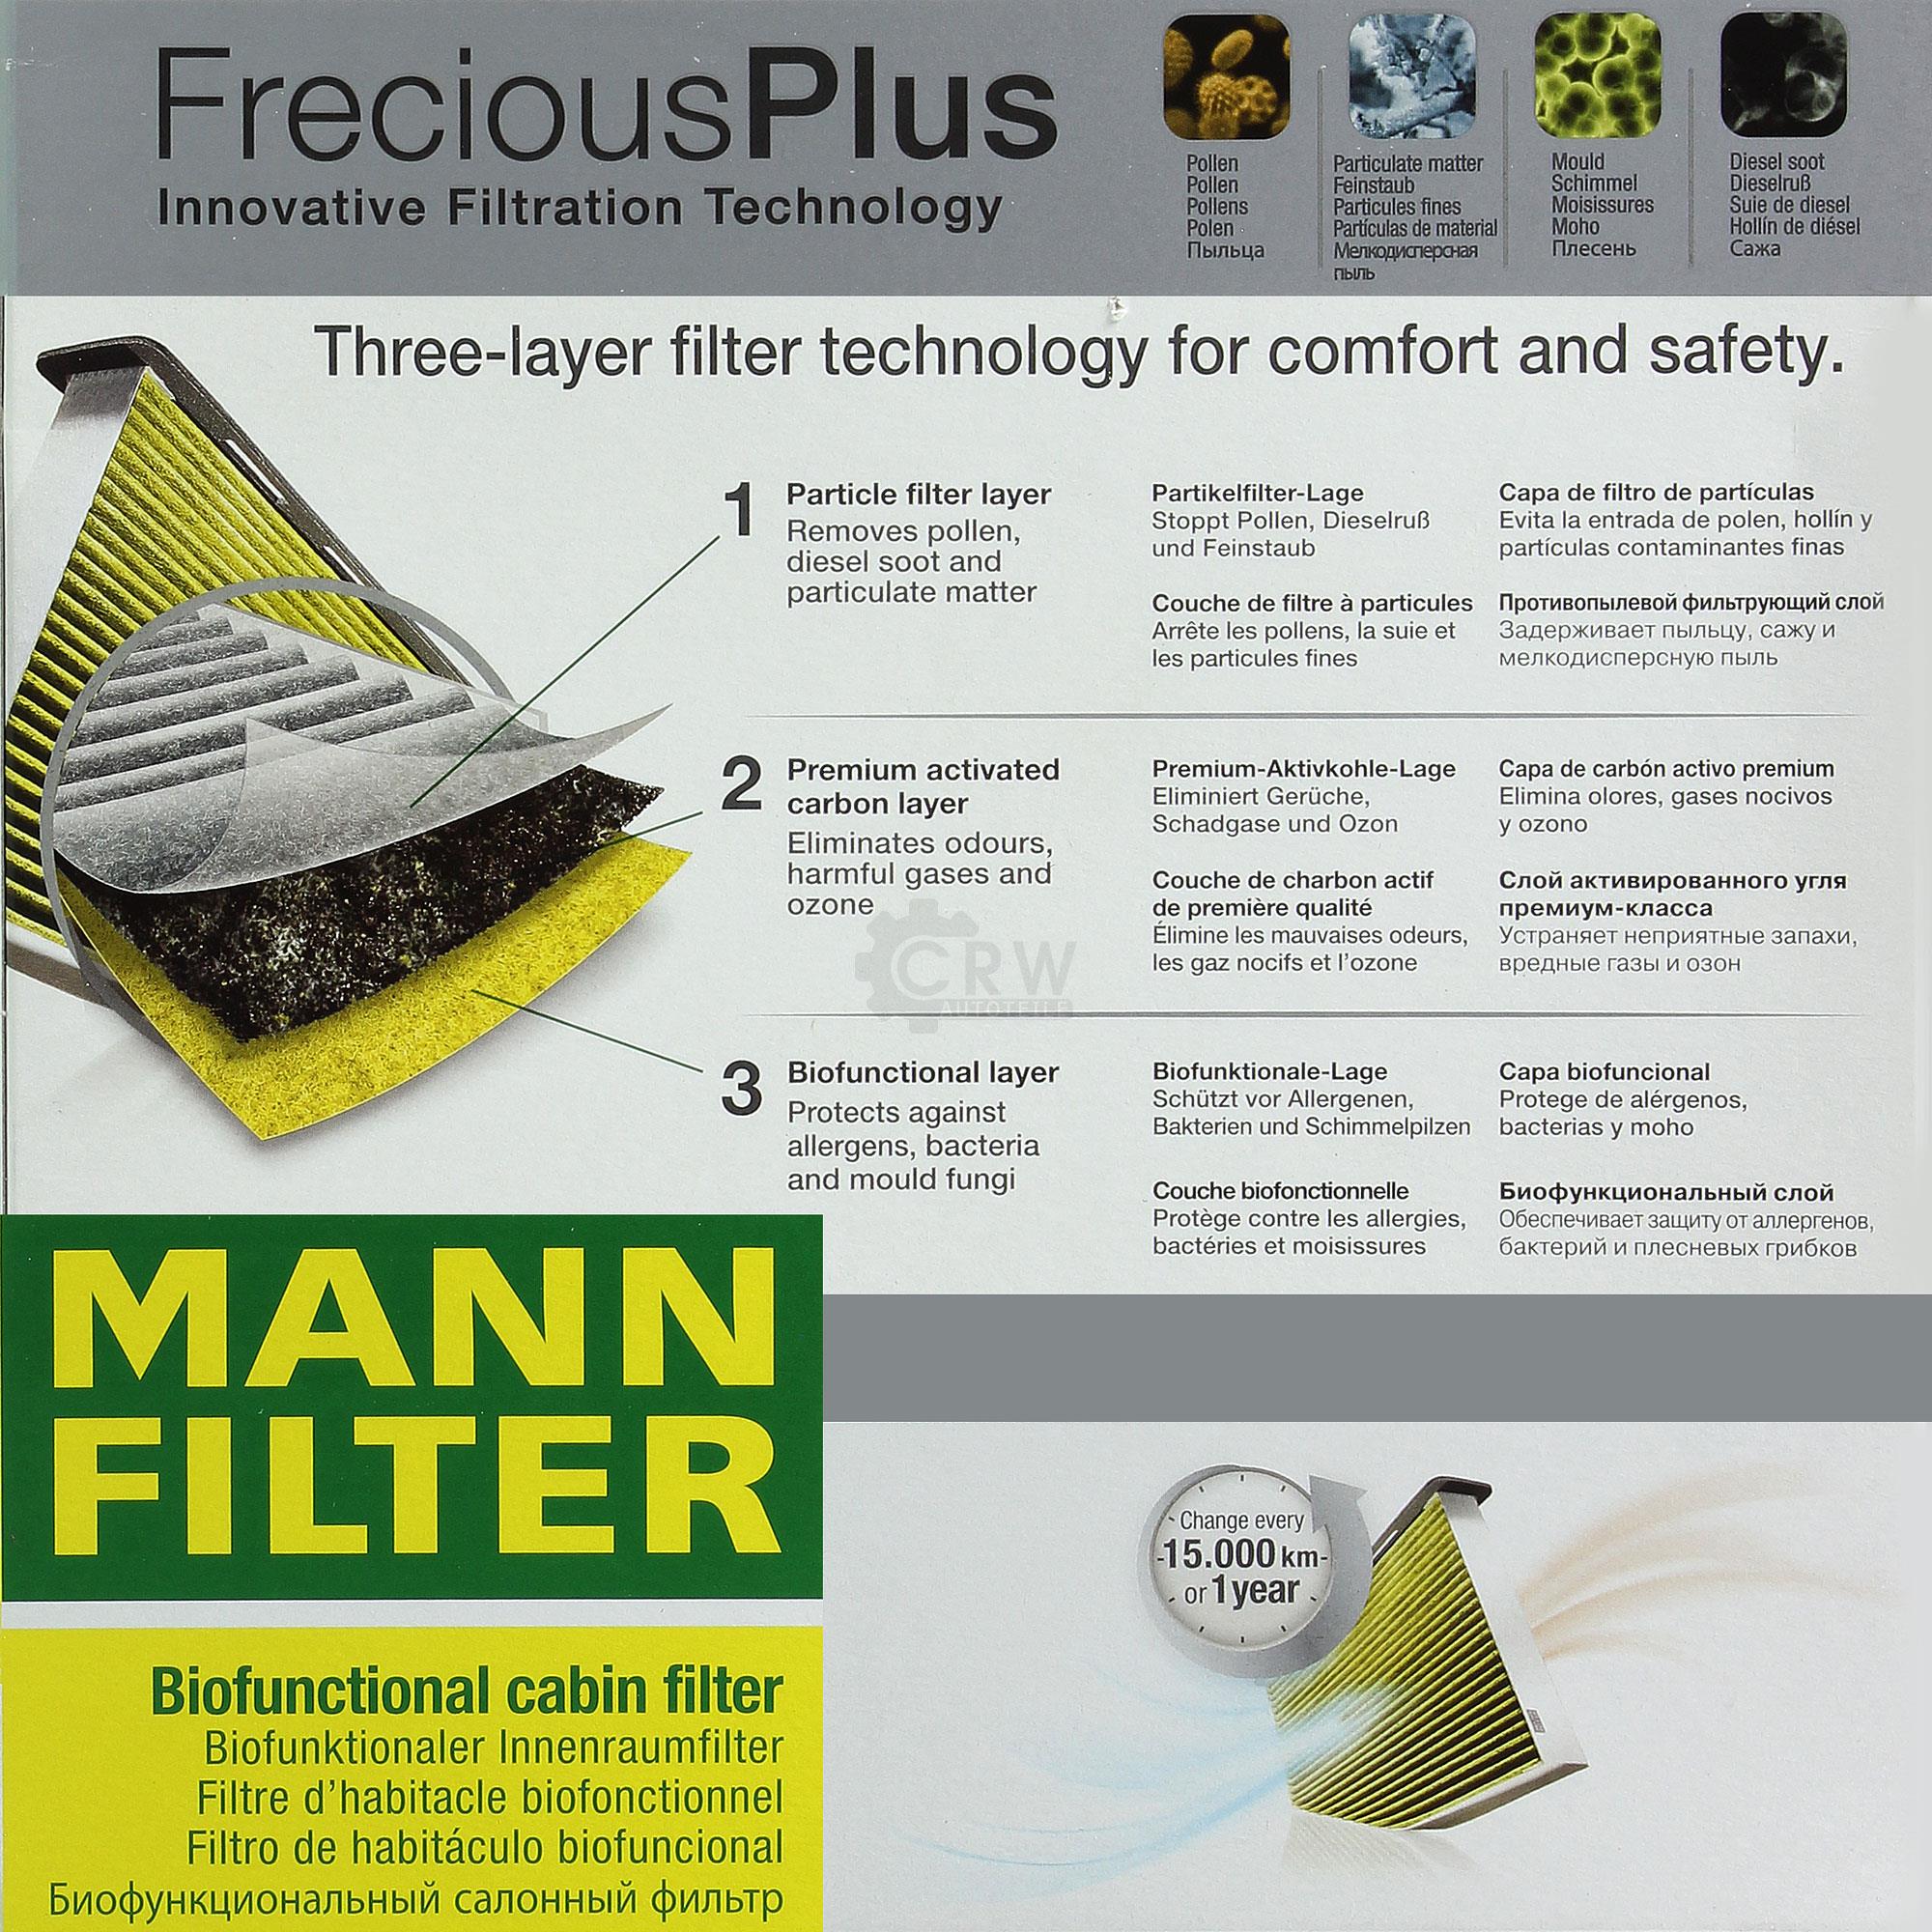 MANN-Filter Innenraumfilter Biofunctional für Allergiker FP 4436